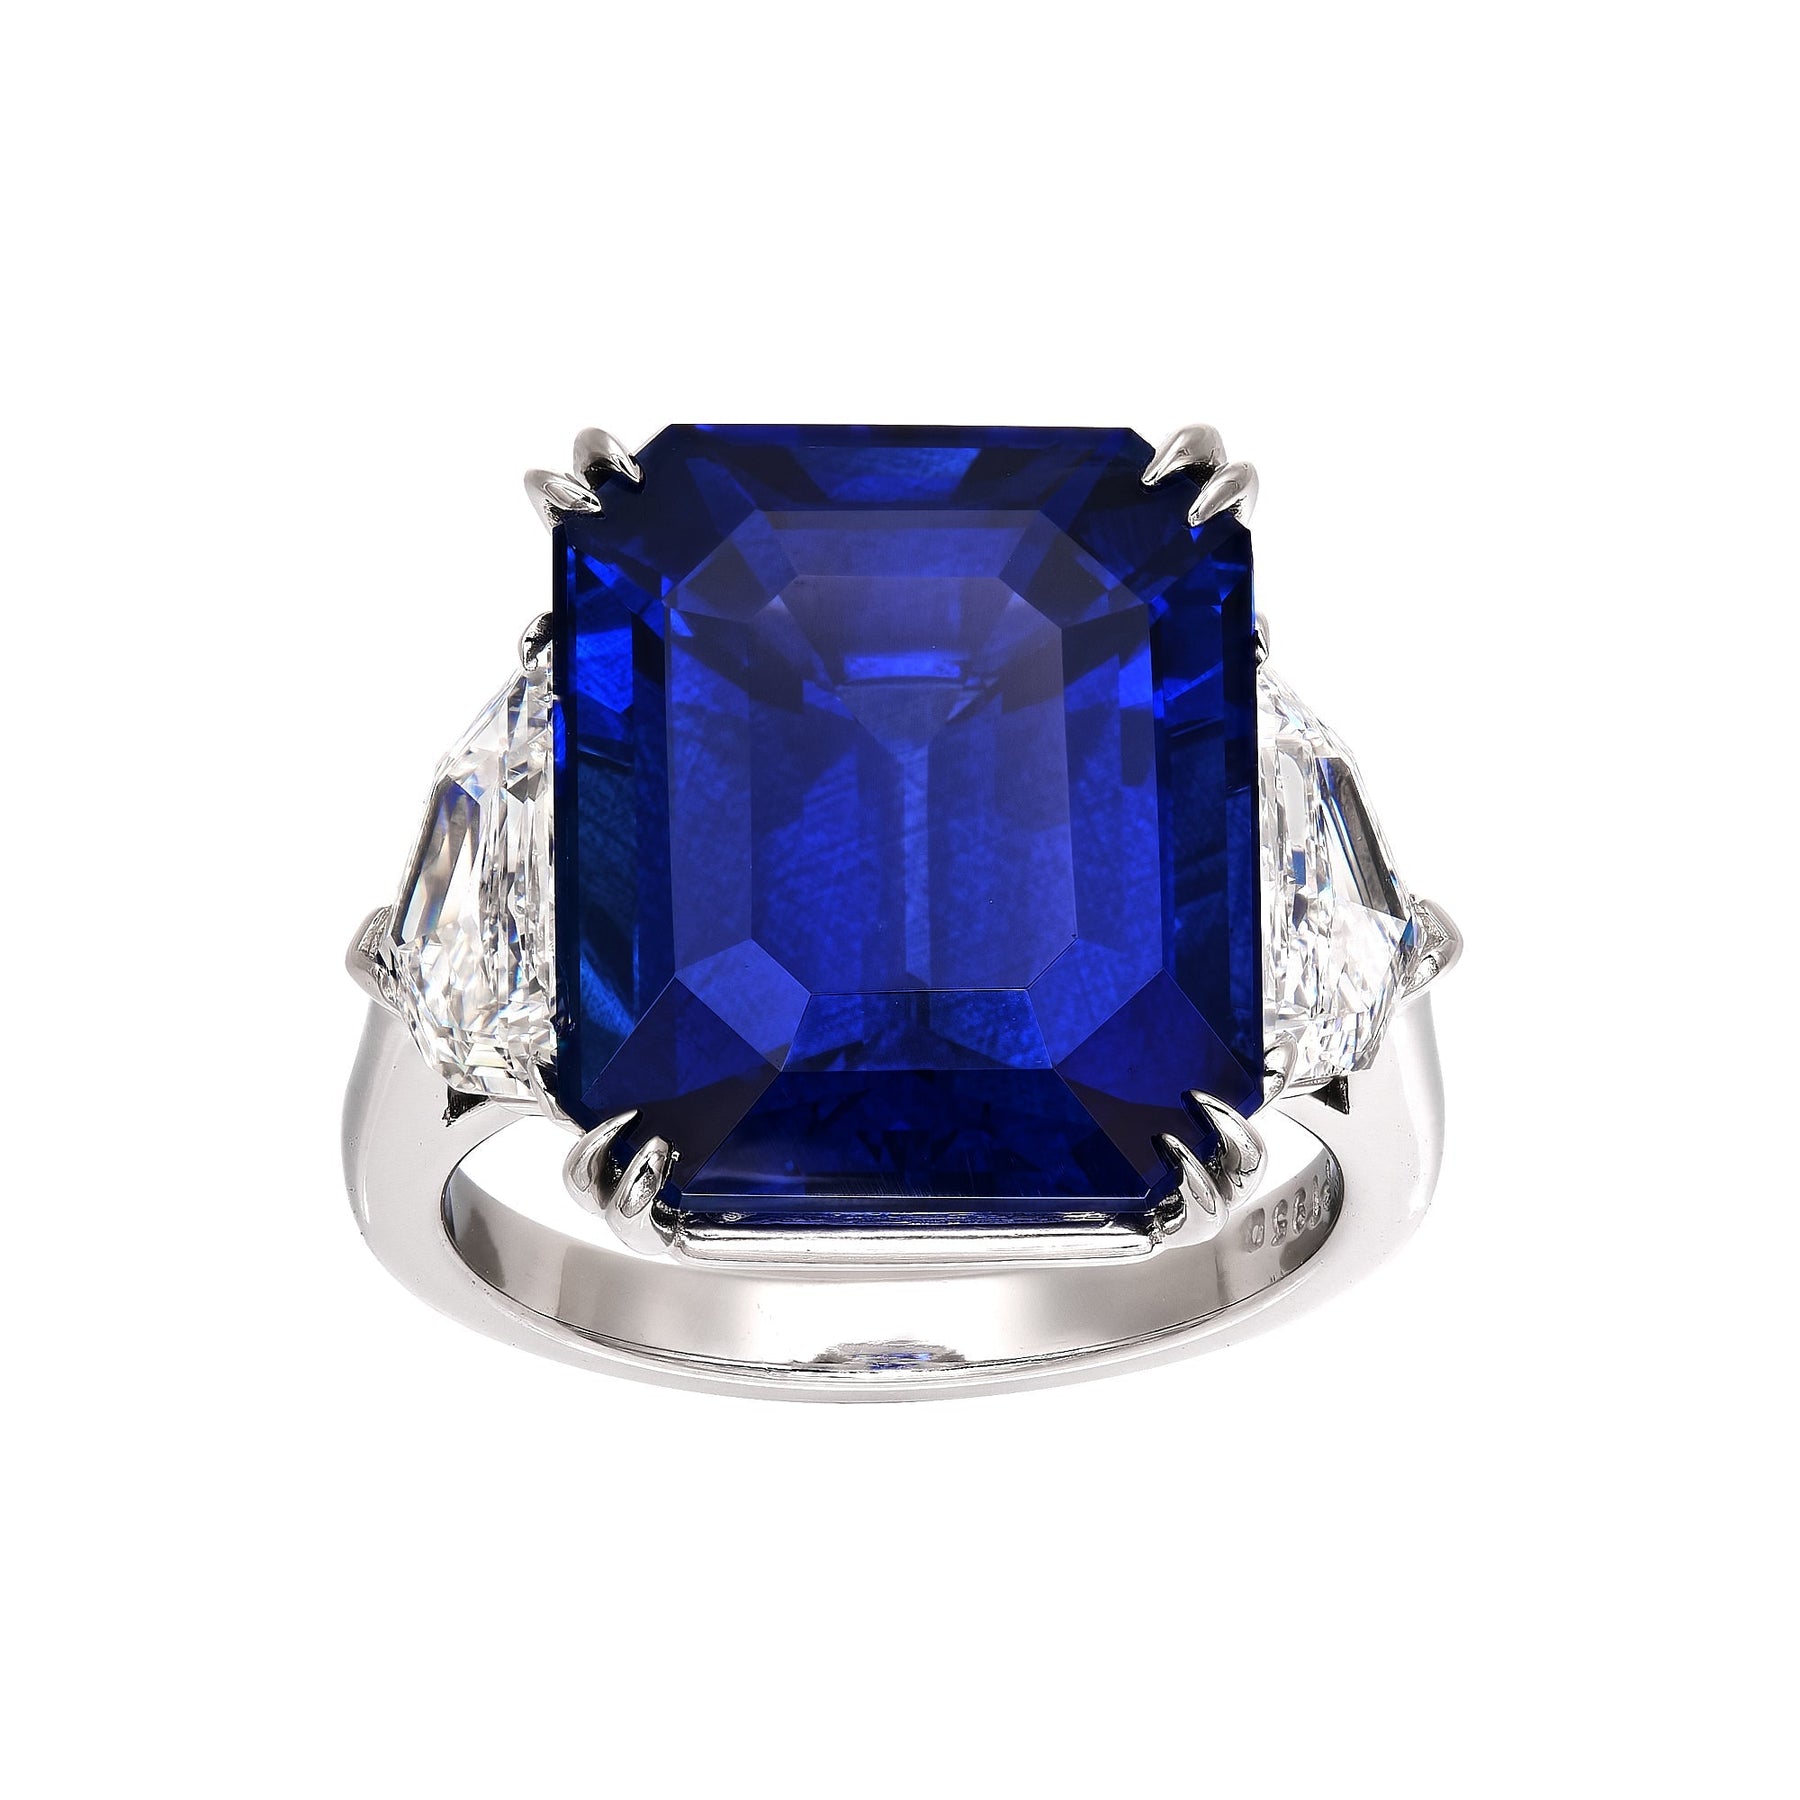 Kashmir Sapphire with Historic American Provenance Leads Bonhams New York  Jewels Sale - Alain.R.Truong